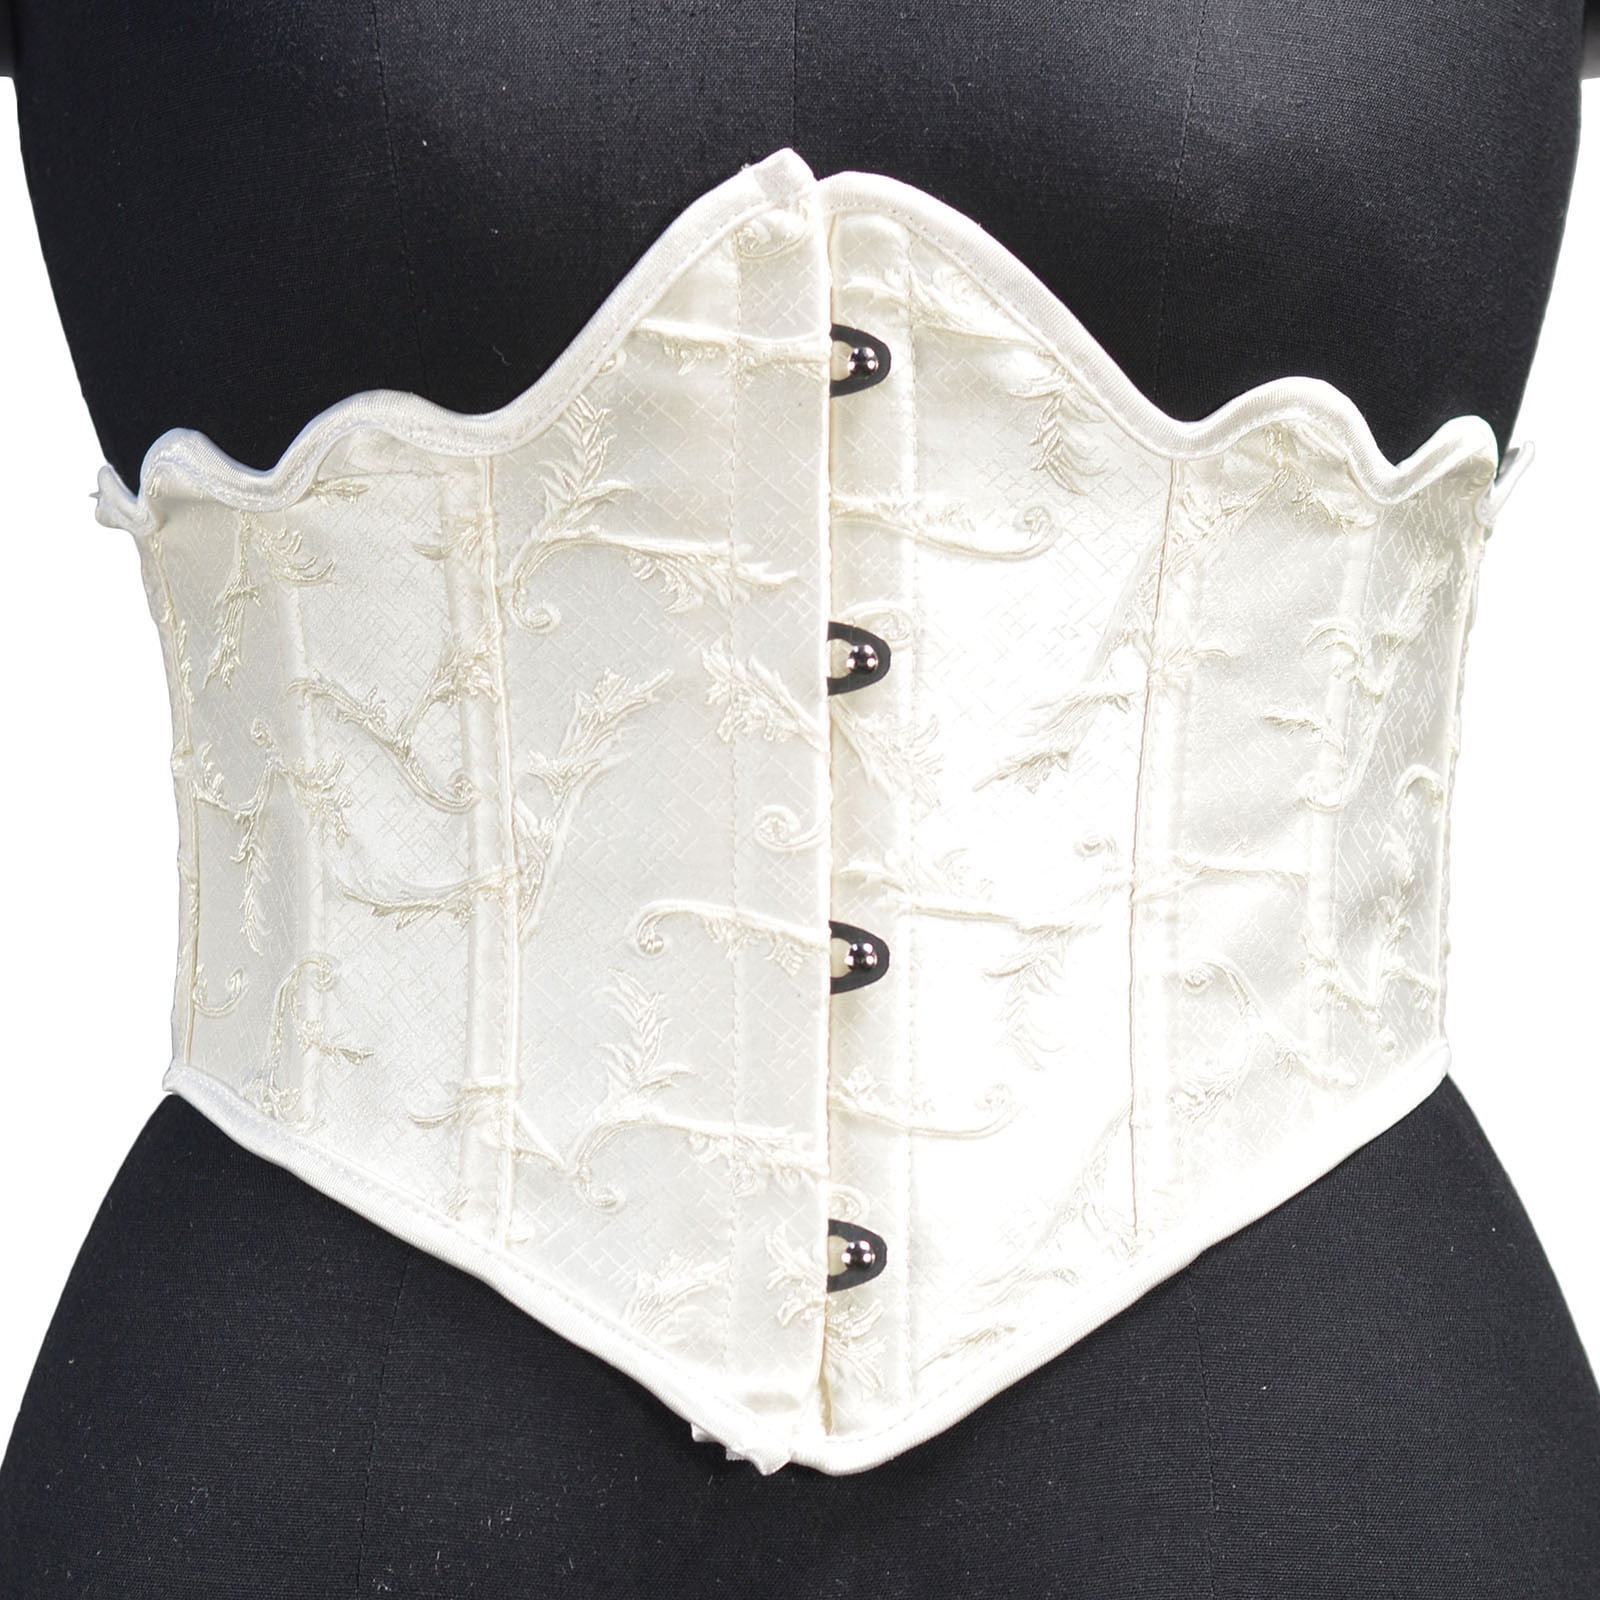 Vintage floral hourglass corset top, size S